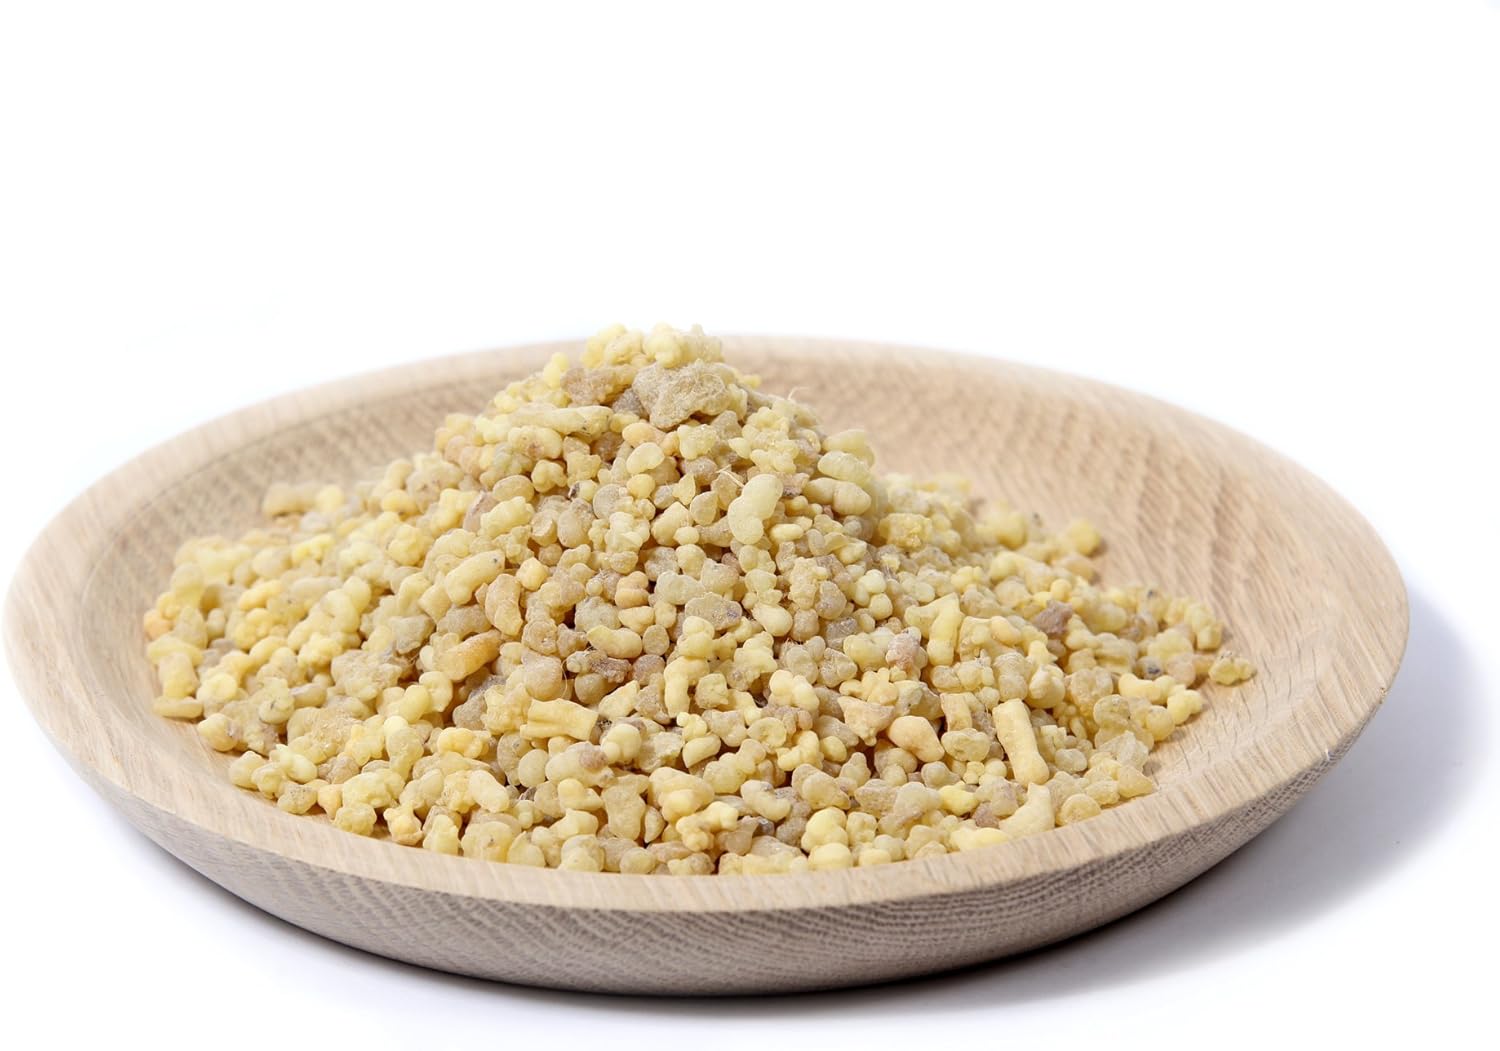 Mystic Moments | Frankincense Granules 1Kg Pure & Natural Vegan GMO Free